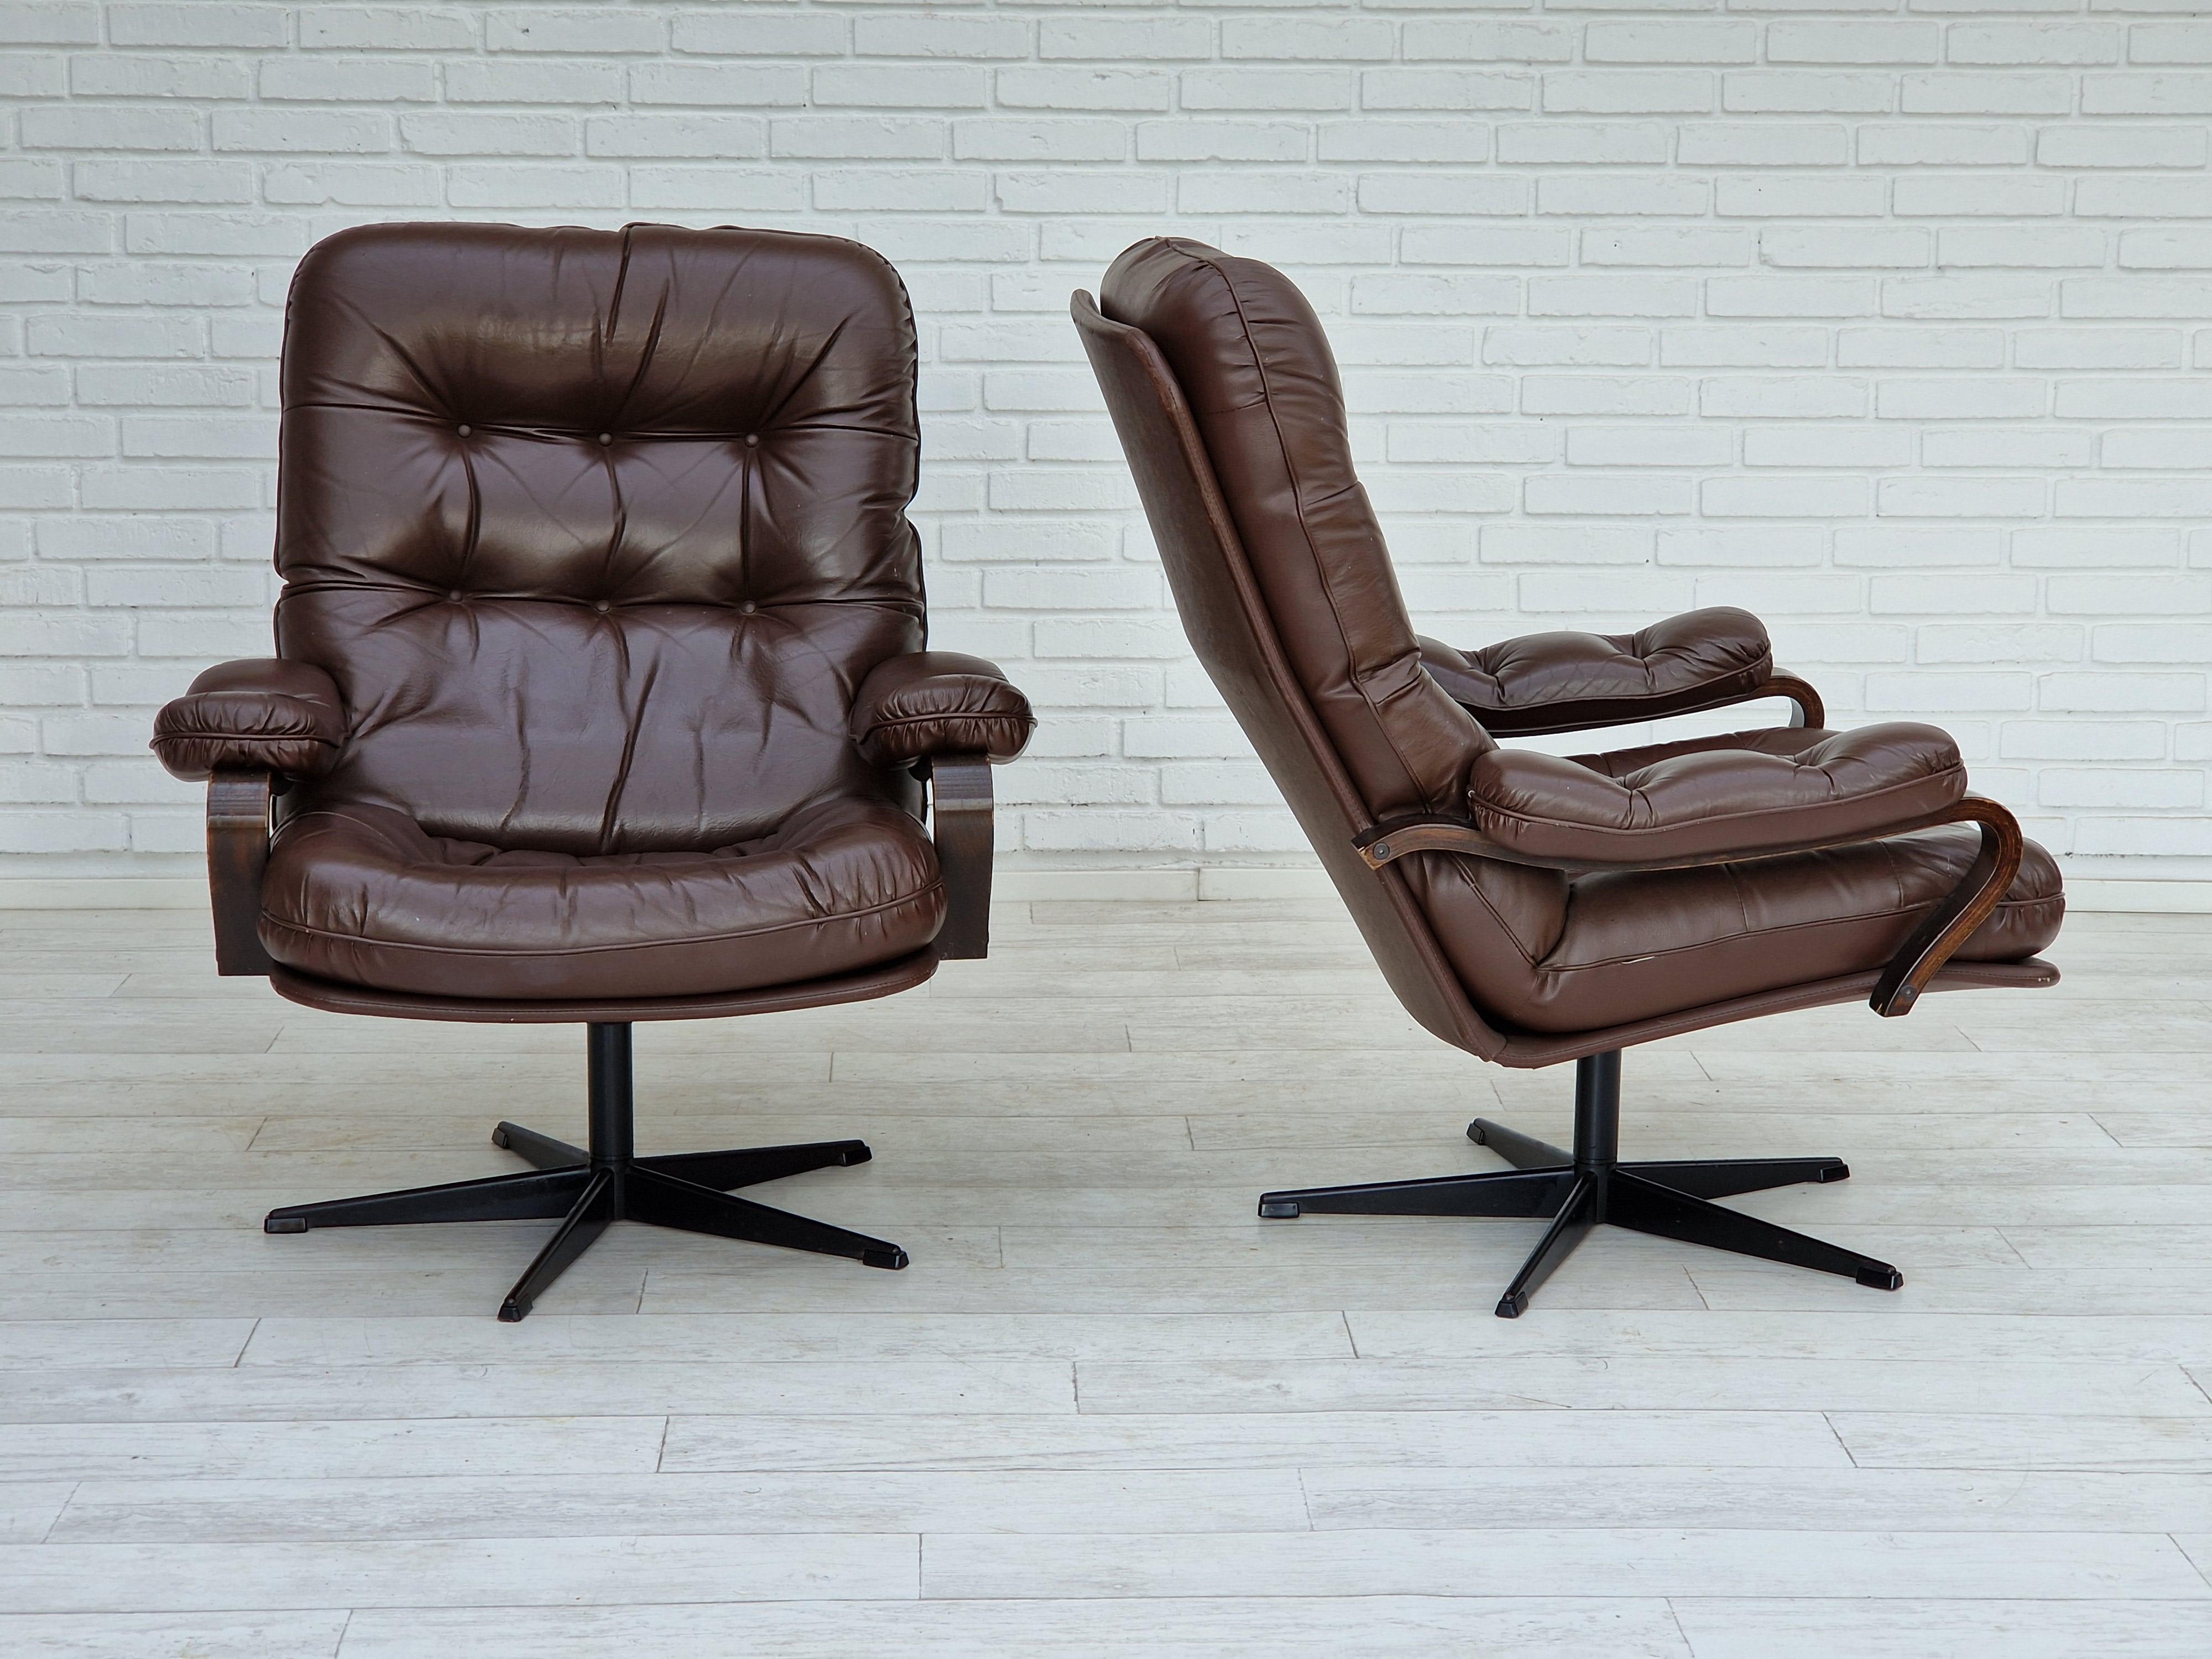 Scandinavian Modern 1970s, Vintage Danish, pair of swivel leather armchairs, original condition.